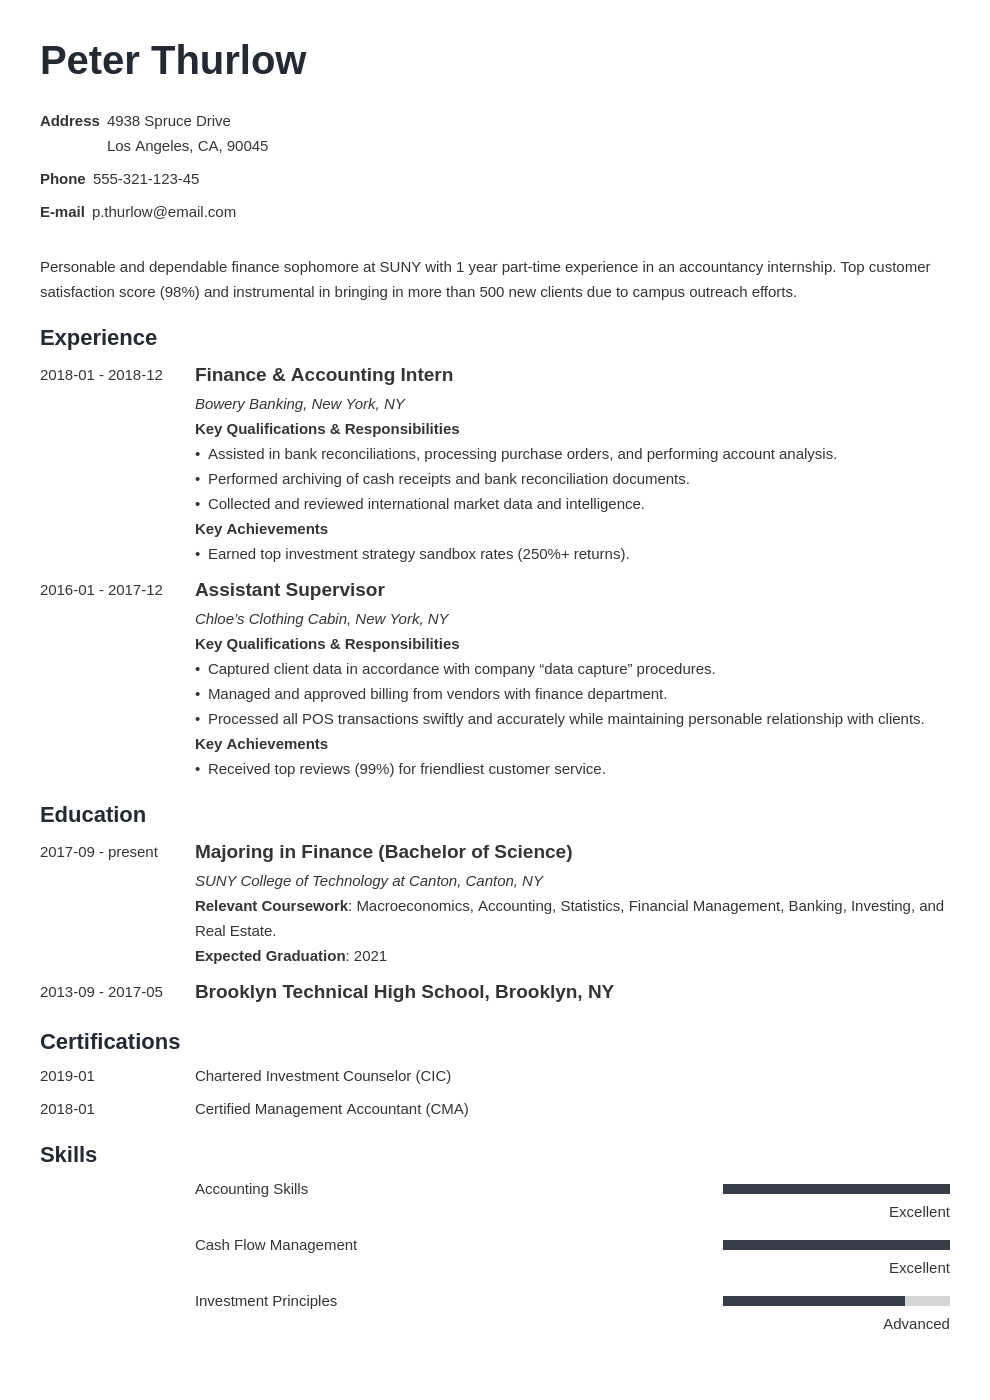 Resume for Internship: Template & Guide (10+ Examples) Inside Legal Intern Job Description Template Pertaining To Legal Intern Job Description Template